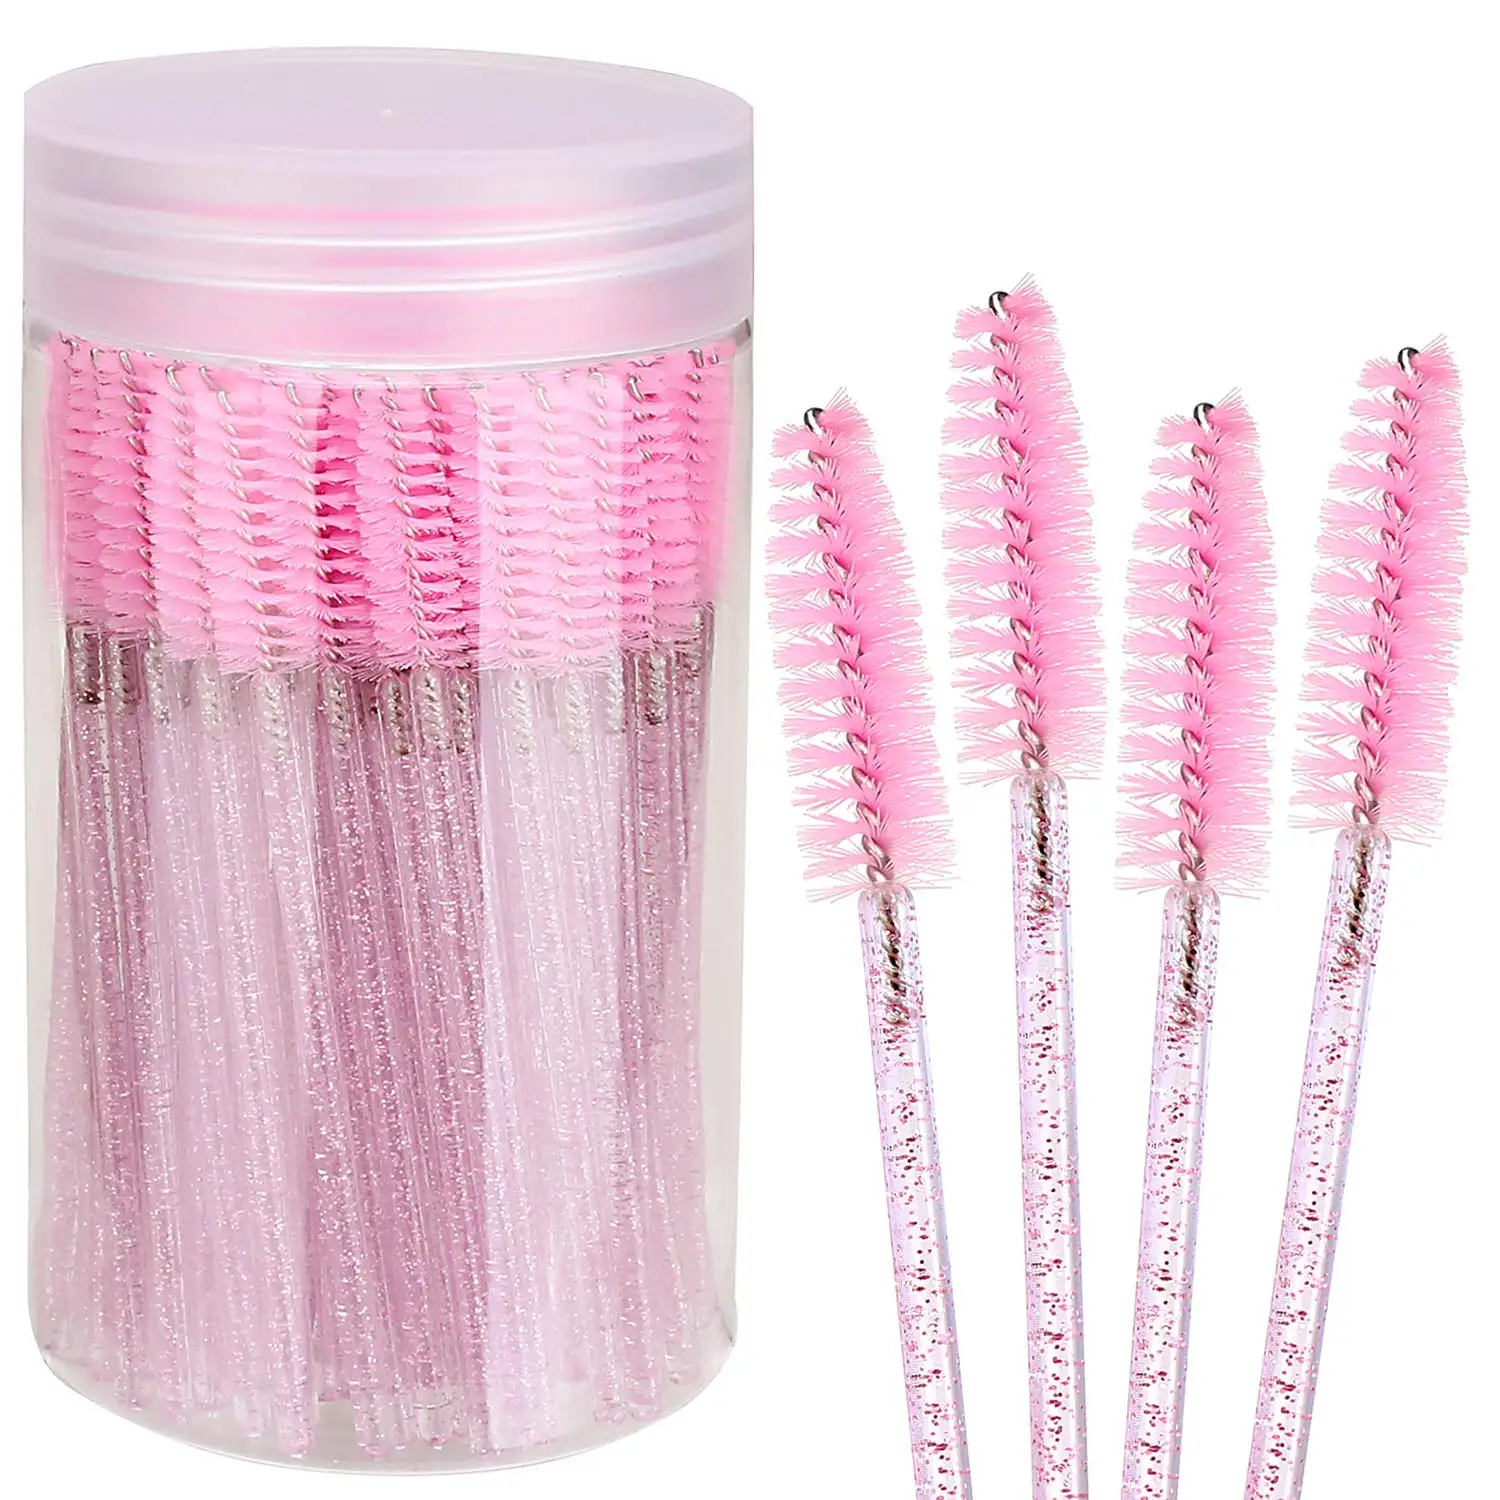 

Disposable Mascara Brush with Container Mascara Wands Makeup Brush Set Applicators Kit for Eyelash Extensions and Eyebrow Brush